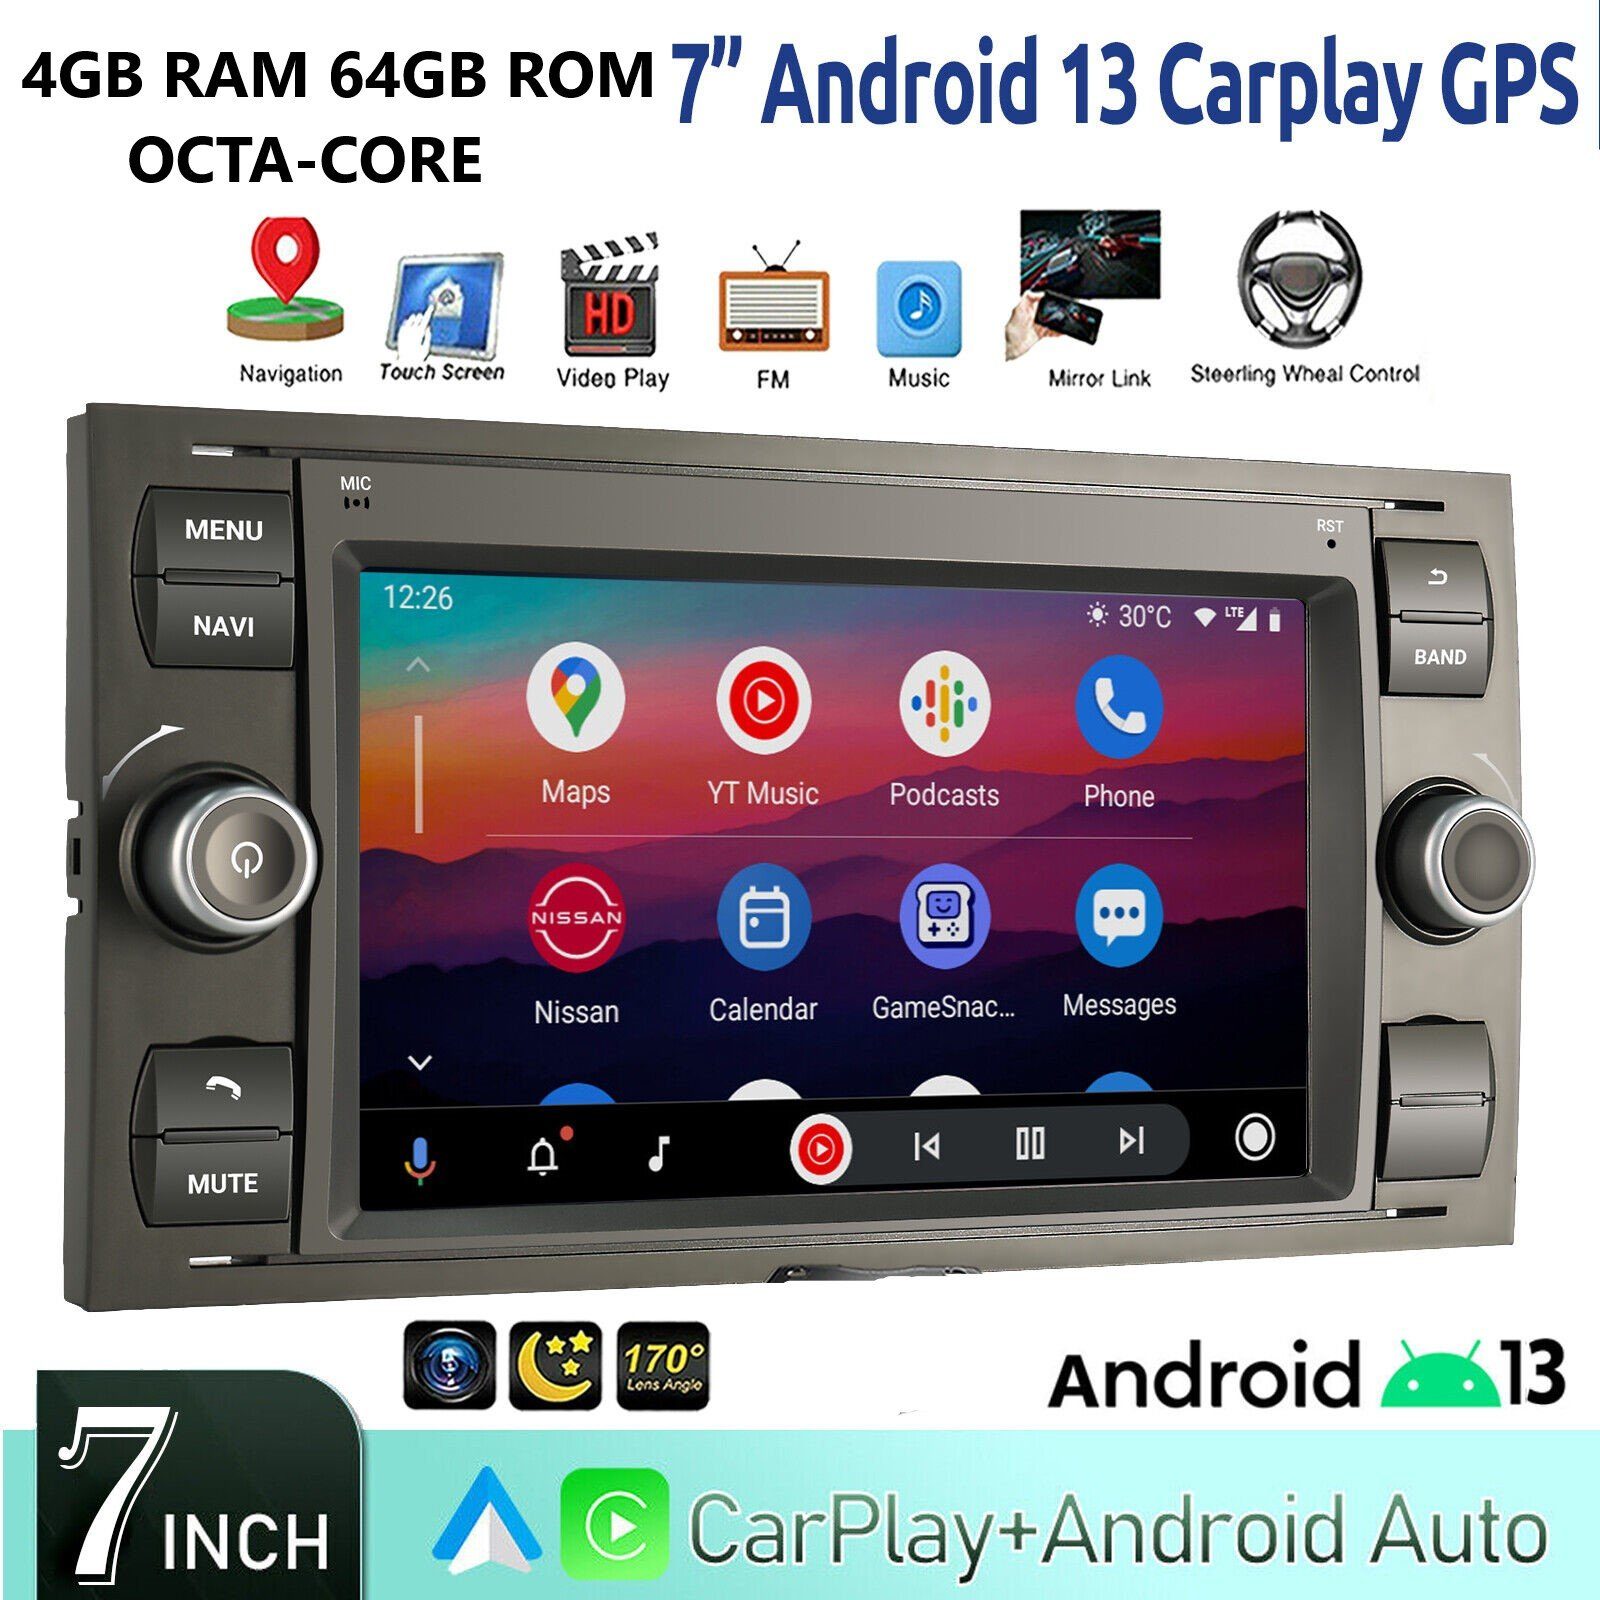 GABITECH 7 zoll Android Autoradio GPS Navi für Ford Focus Transit C S MAX  Autoradio (FM, AM, RDS, Qualcomm Octa Core, 8* A75 64-bit 2.2GHz CPU, 4GB  RAM; 64GB ROM)